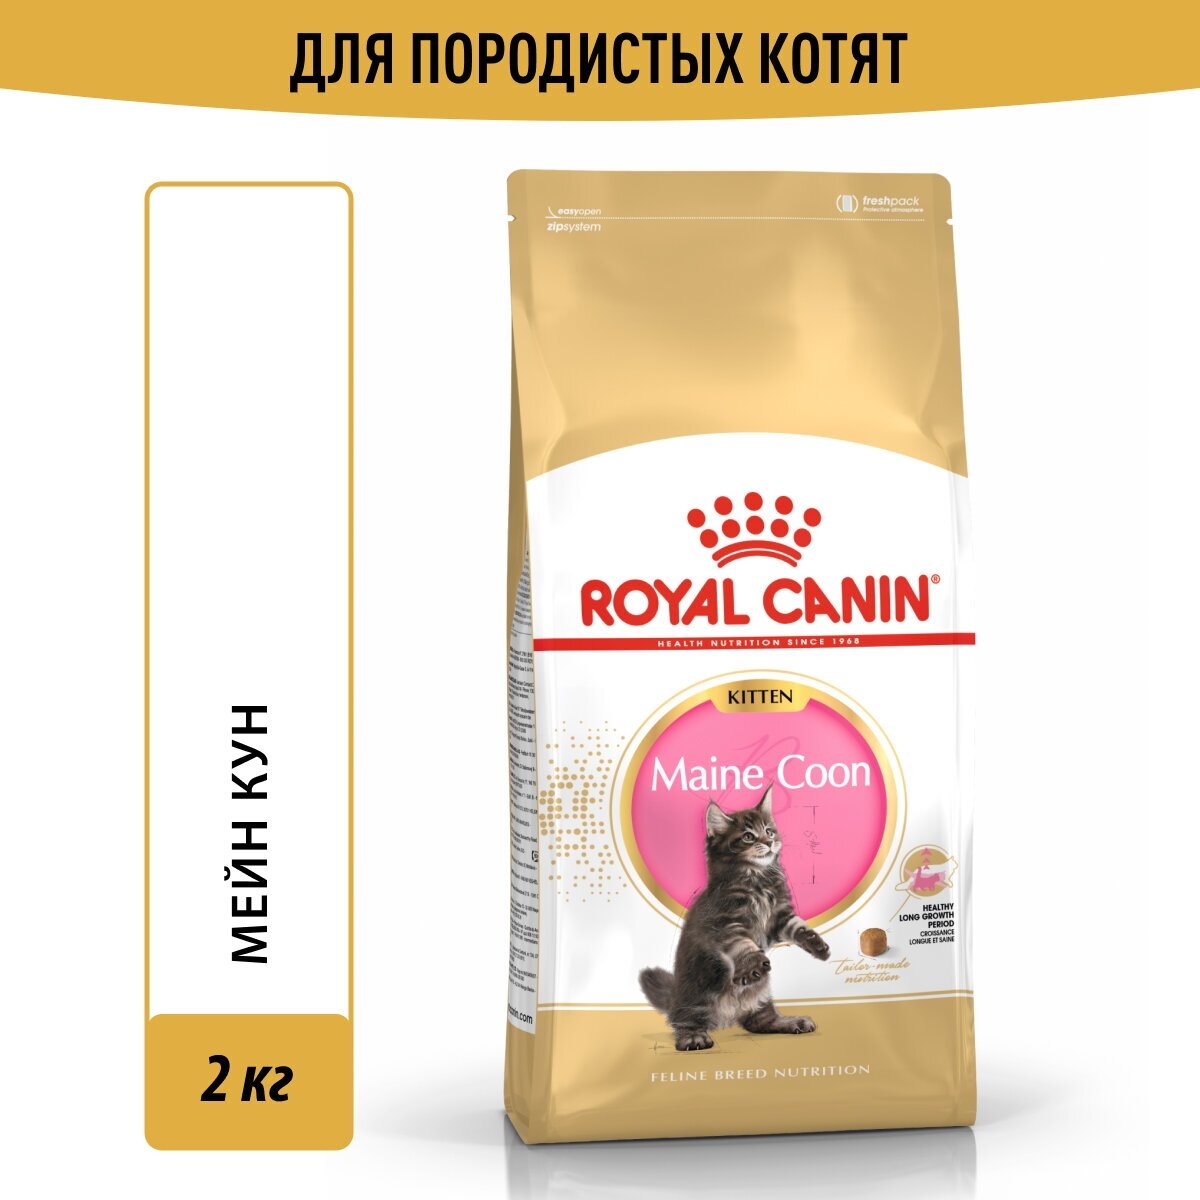 ROYAL CANIN MAINE COON KITTEN 36 для котят мэйн кун (2 кг)